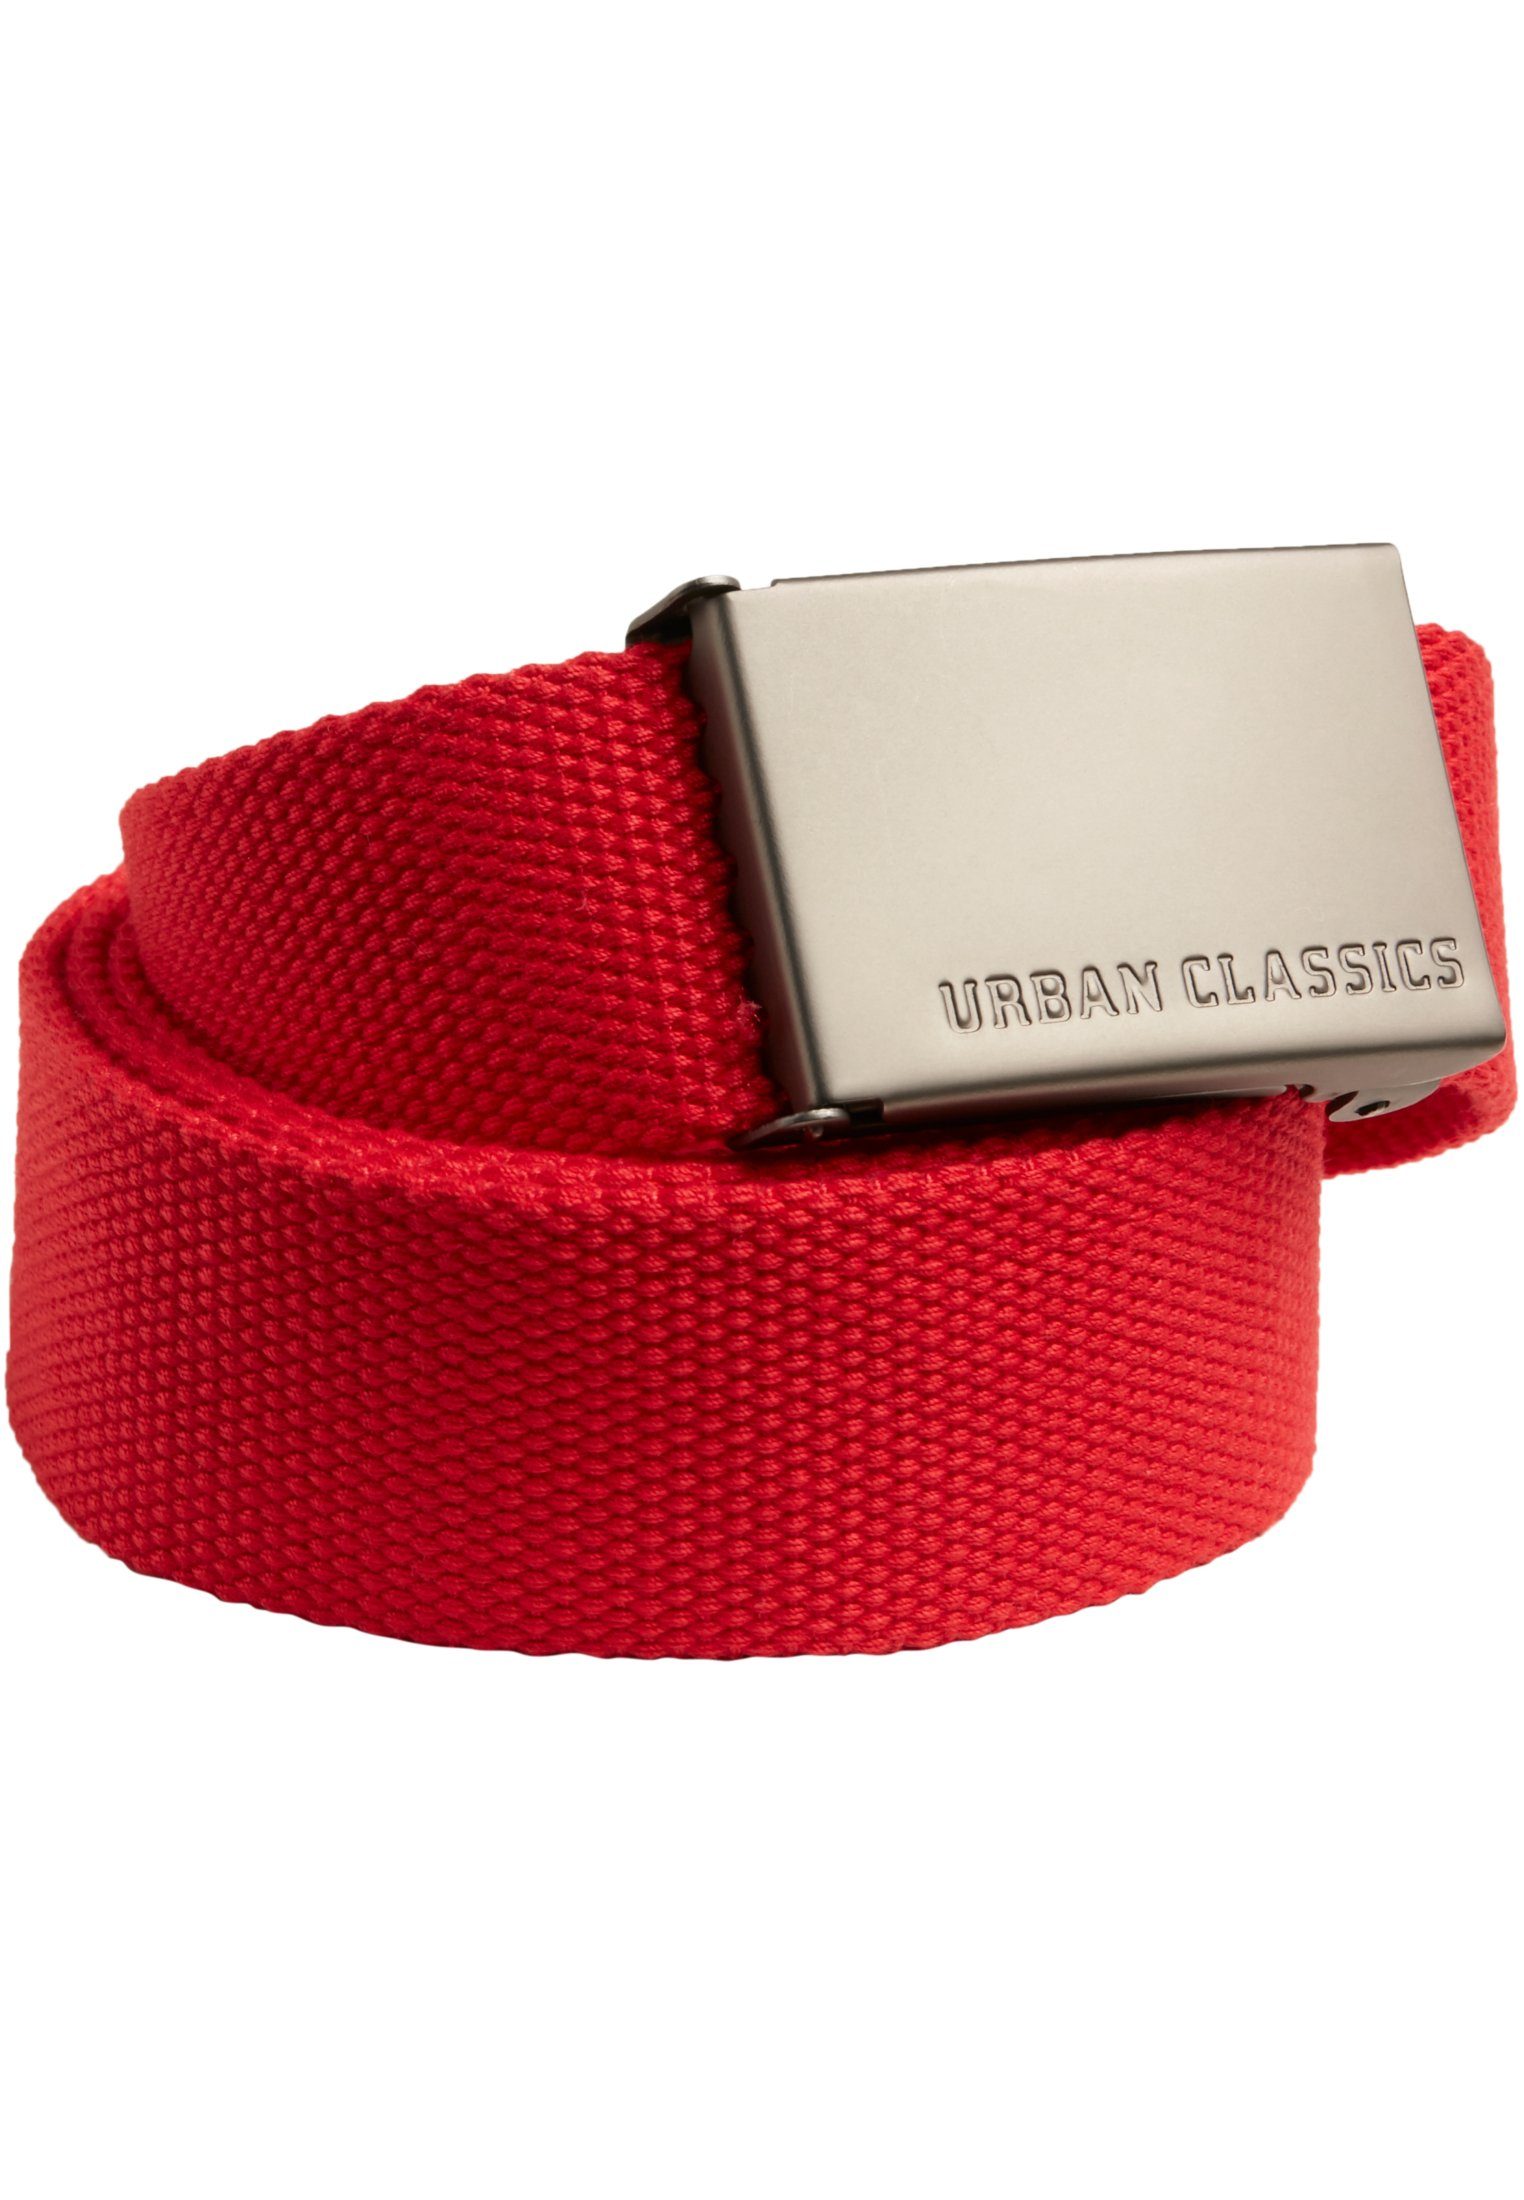 URBAN CLASSICS Belts red Hüftgürtel Canvas Accessoires